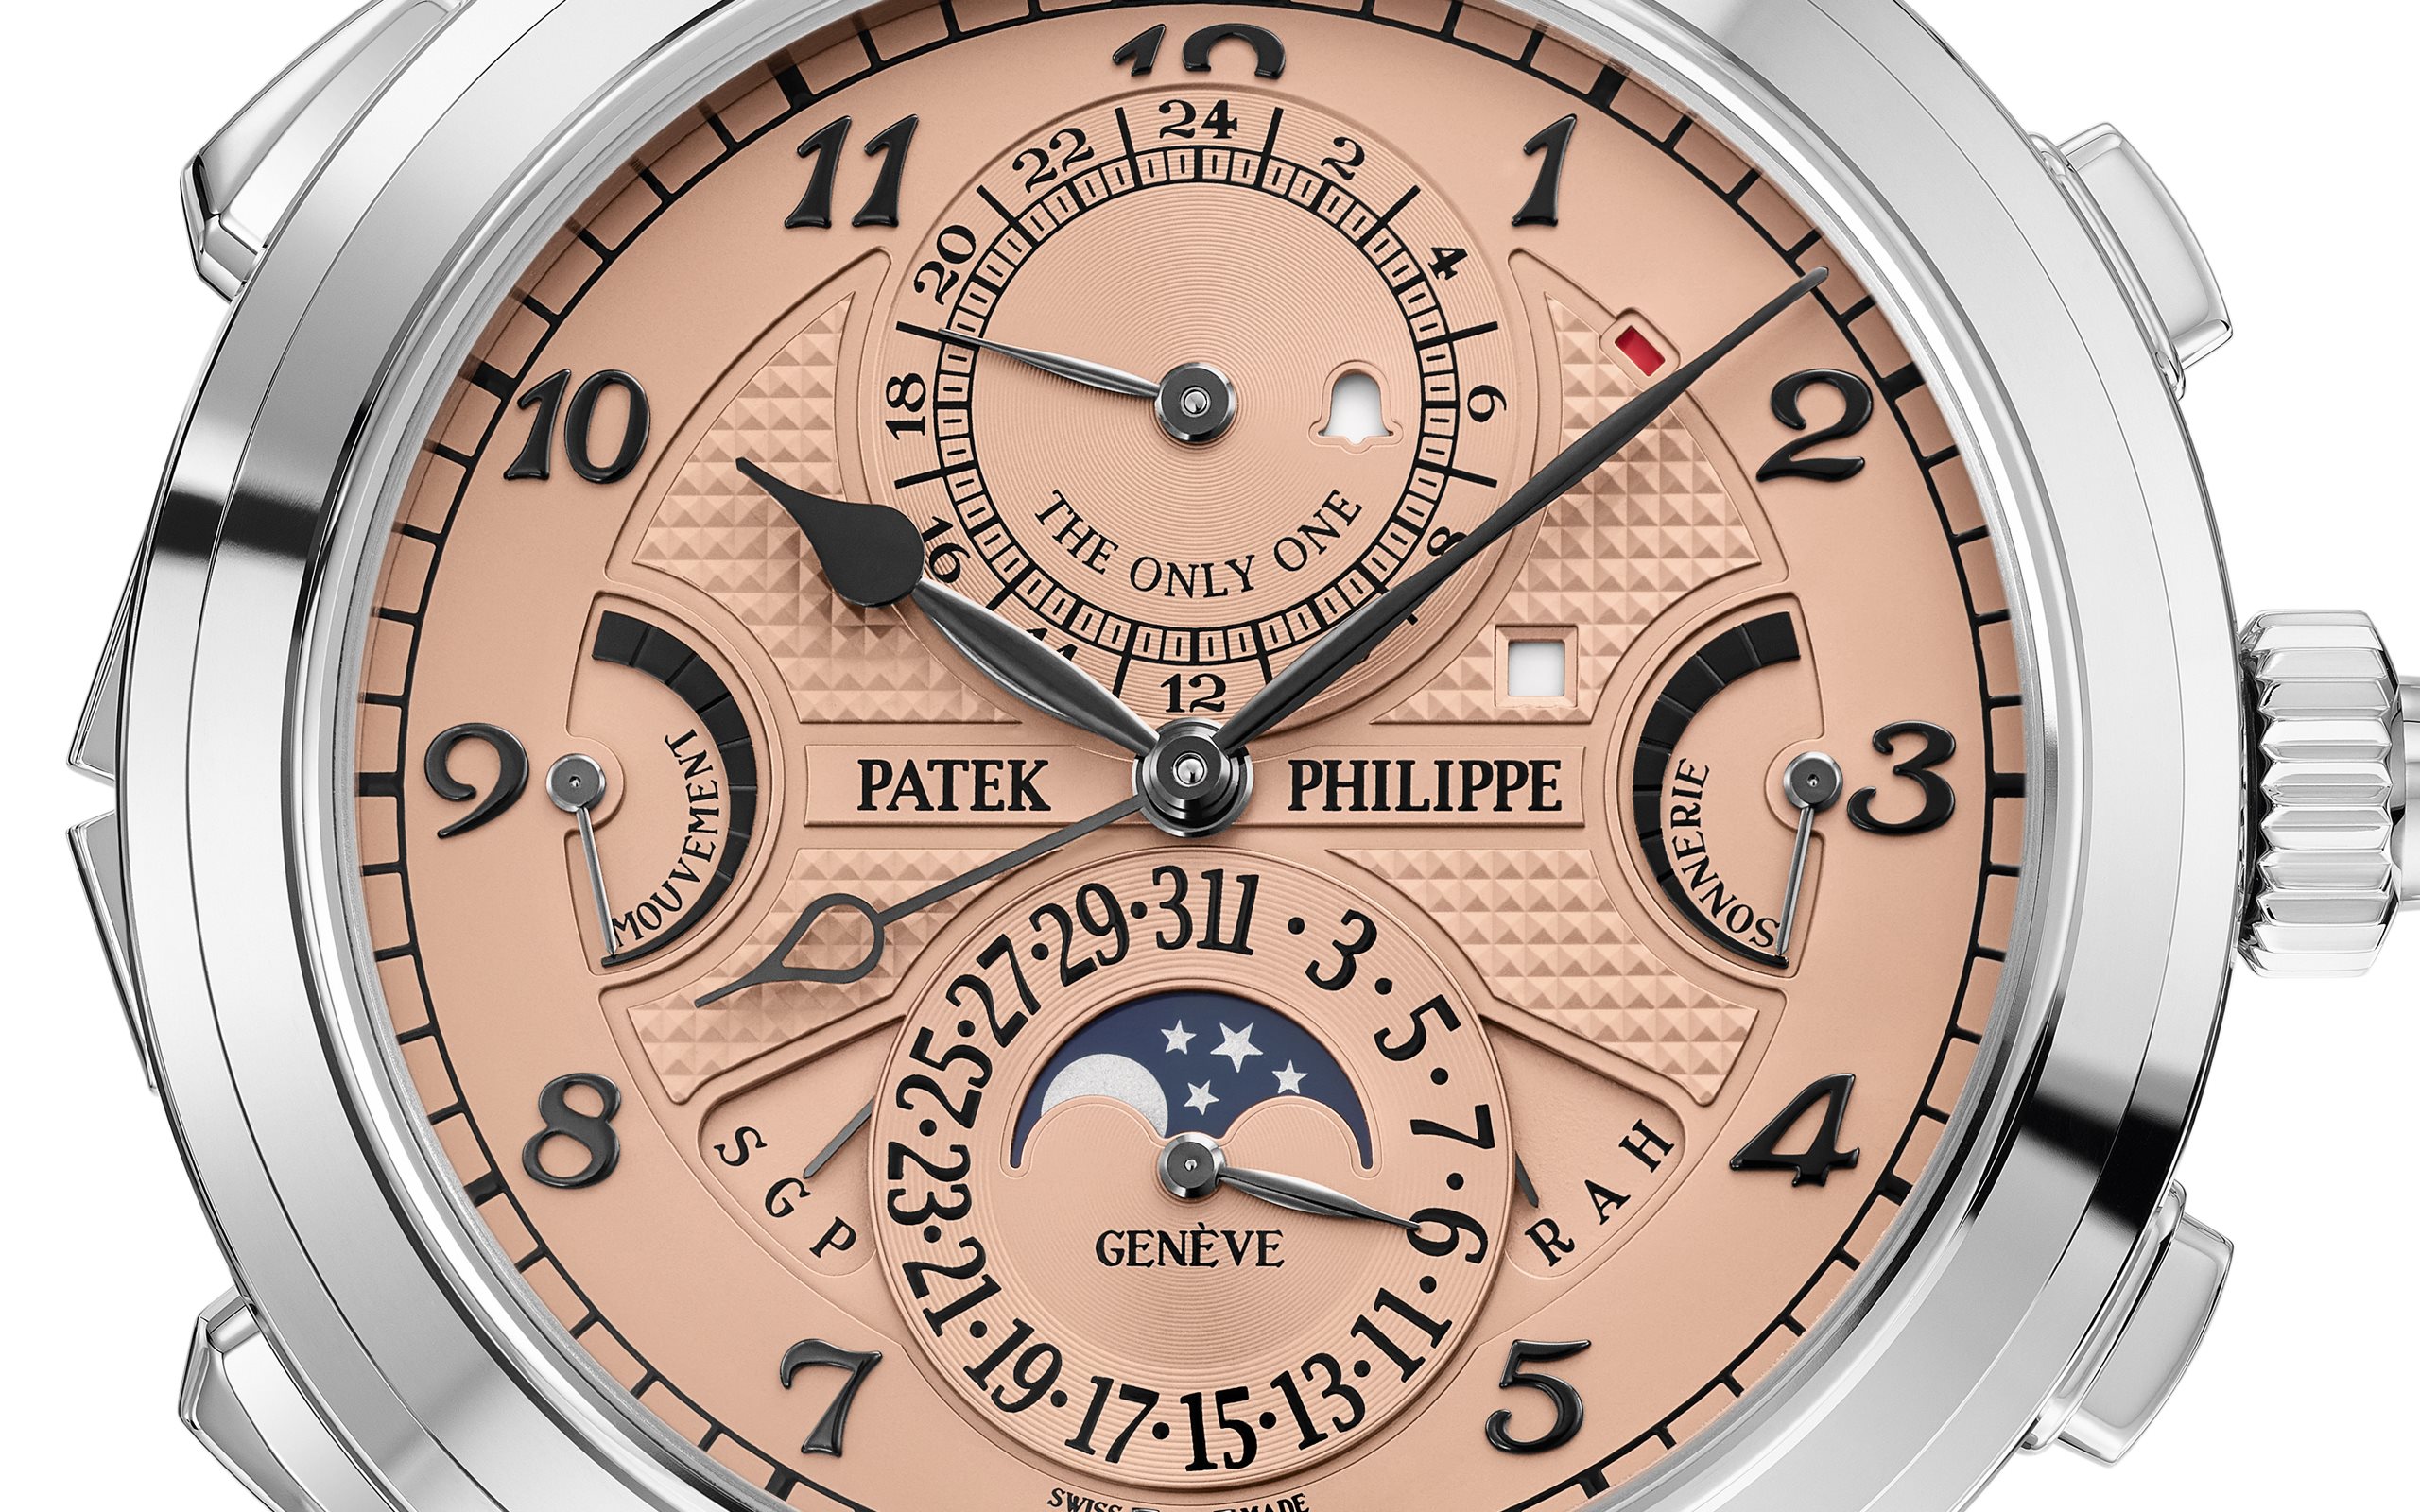 Patek Philippe Patek Philippe Adapted Watch 5940R-001 Perpetual Calendar